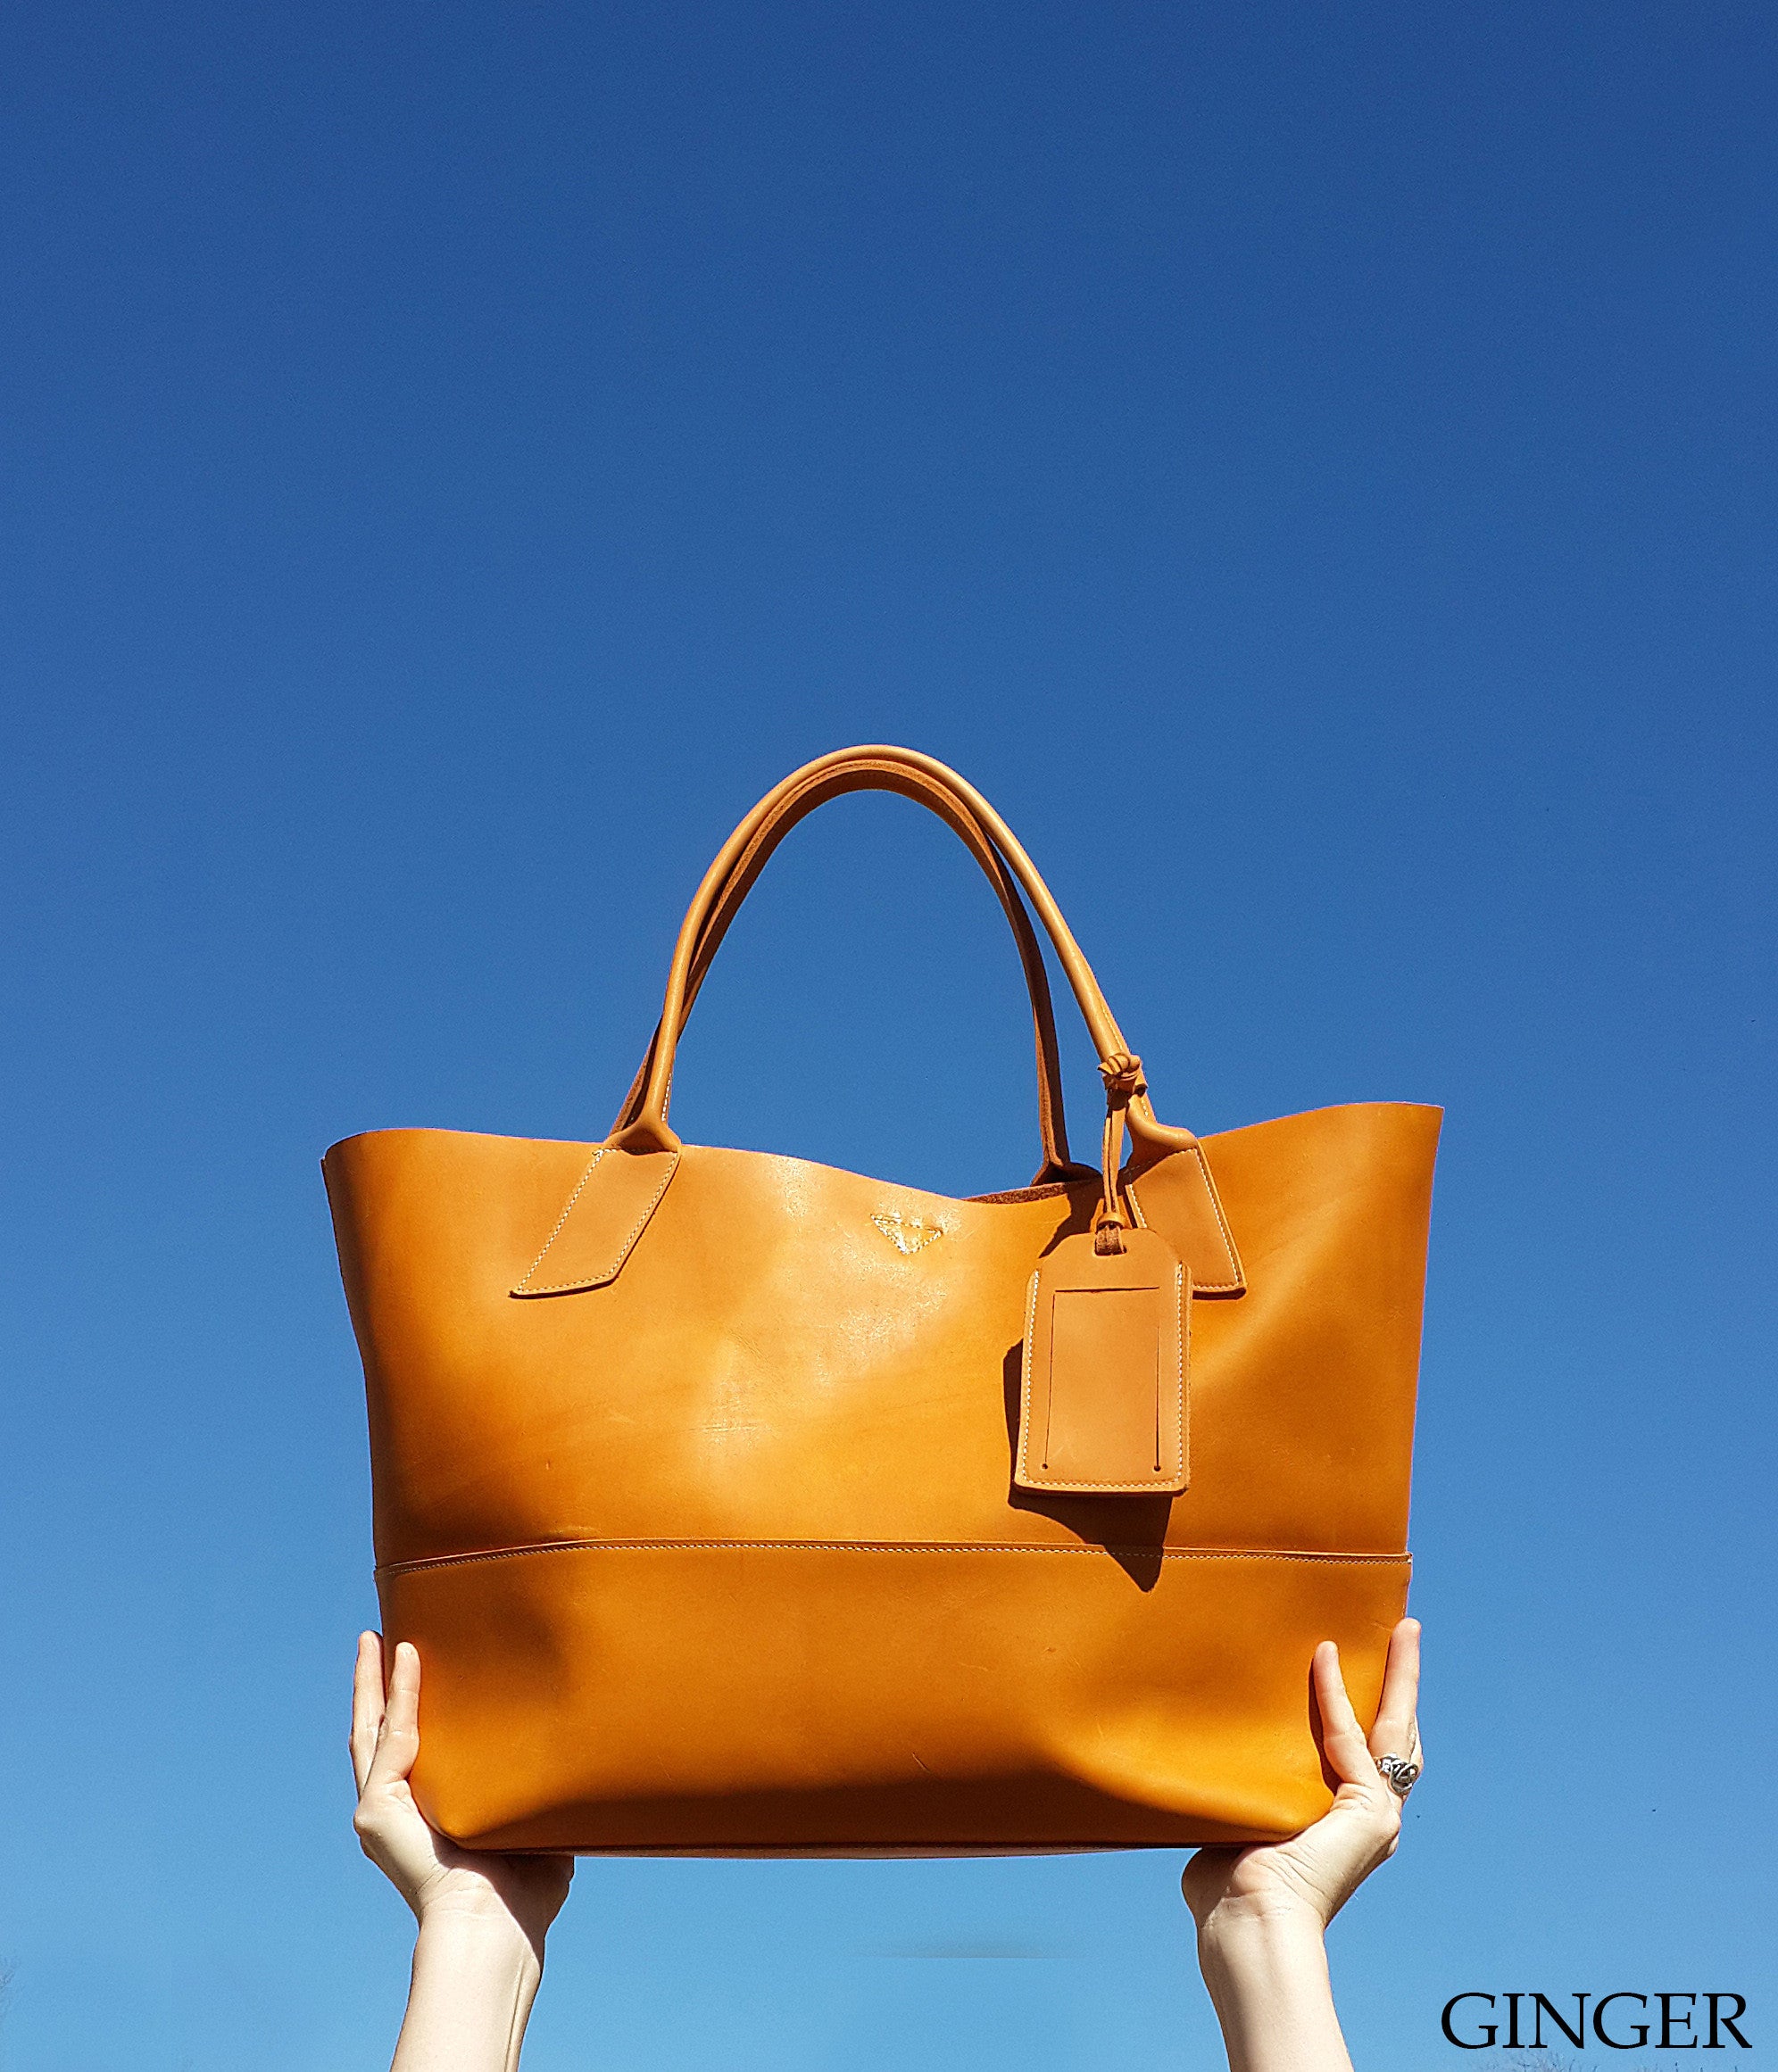 Savannah Leather Tote Bag